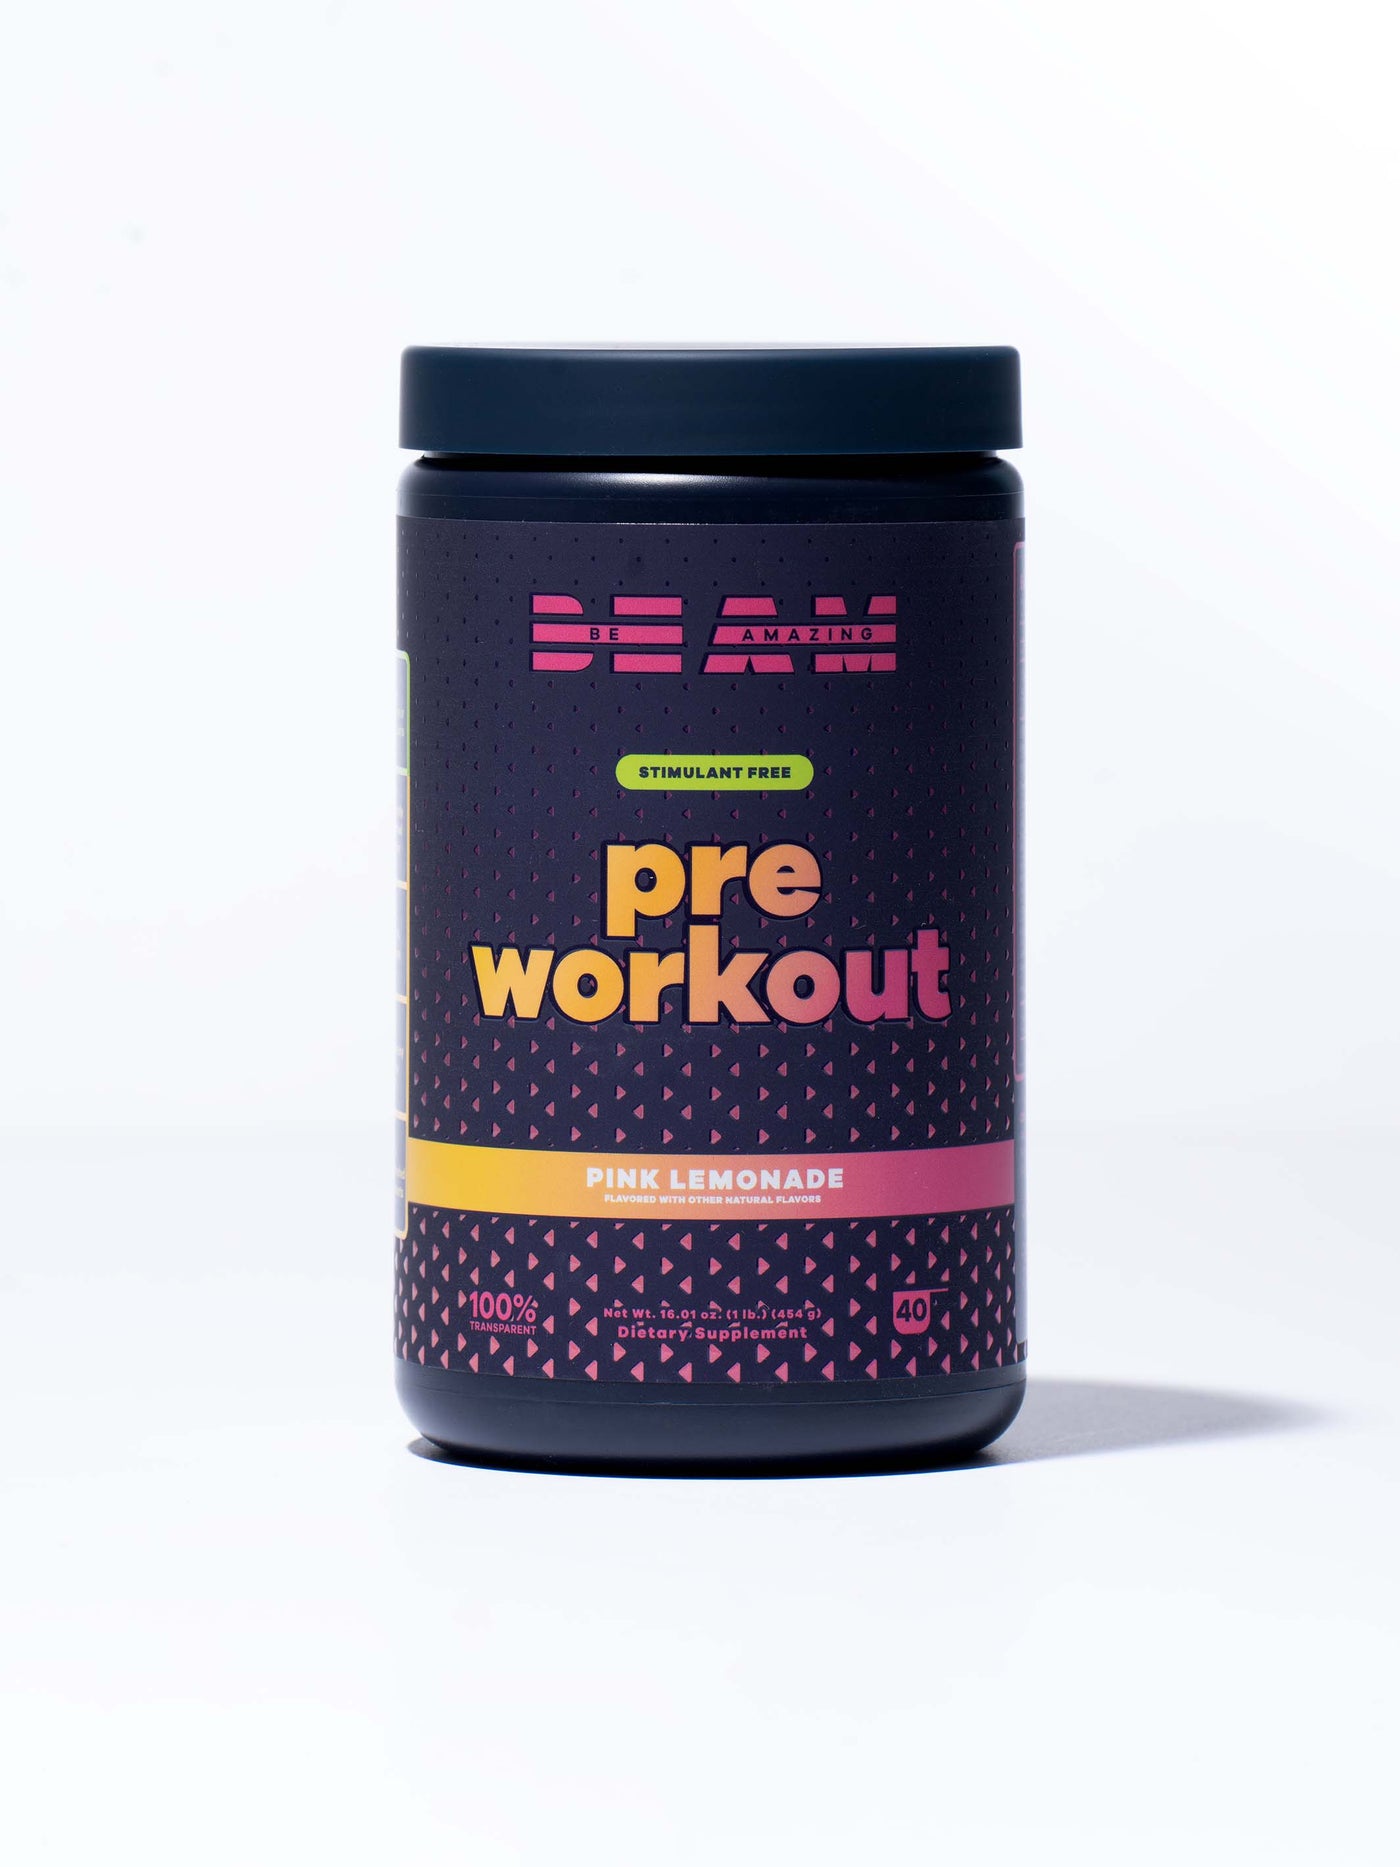 Pink Lemonade Pre Workout Front#40 Scoops / Pink Lemonade